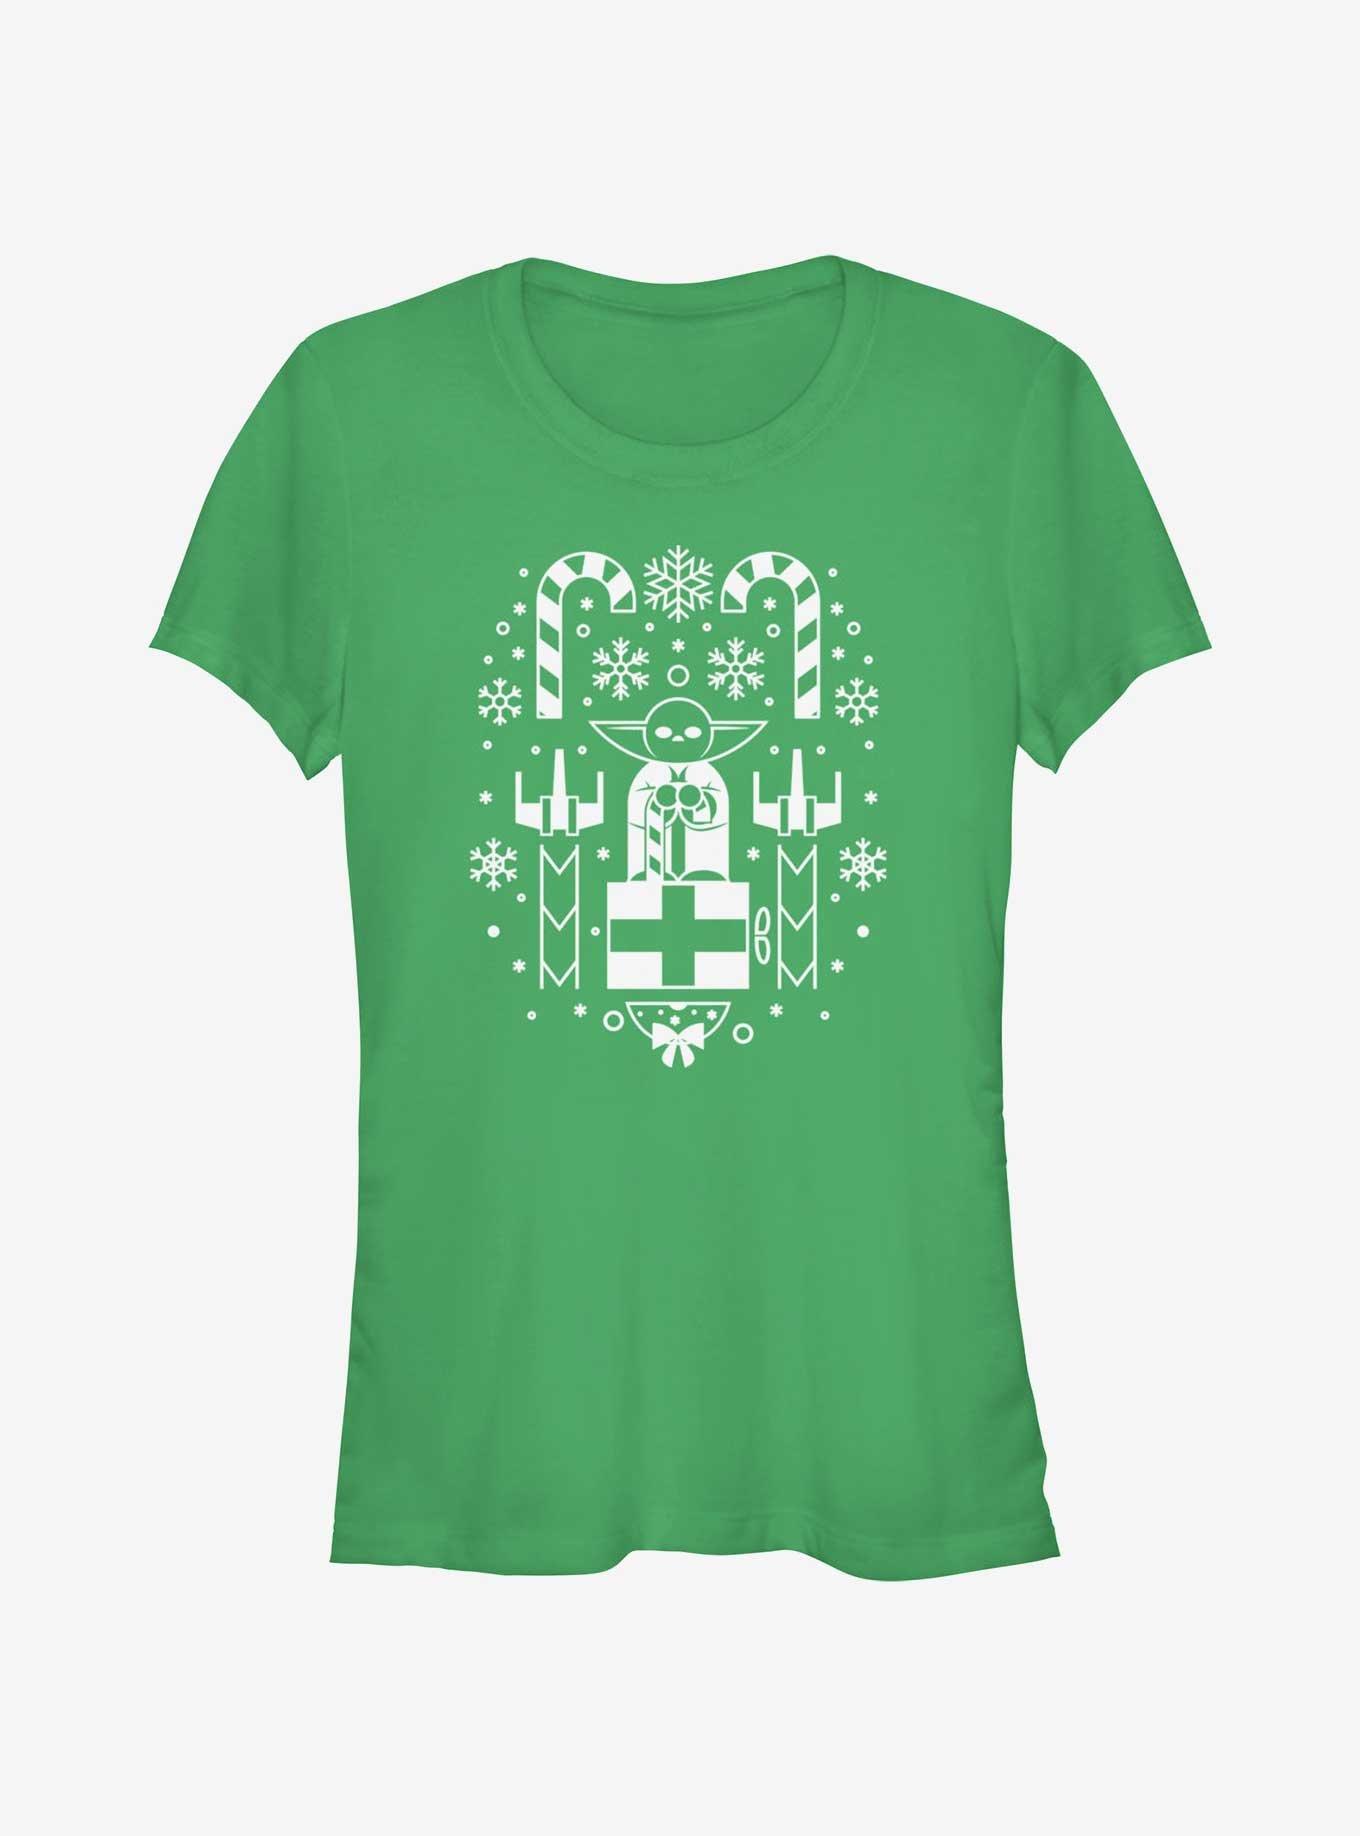 Star Wars Christmas Yoda Girls T-Shirt